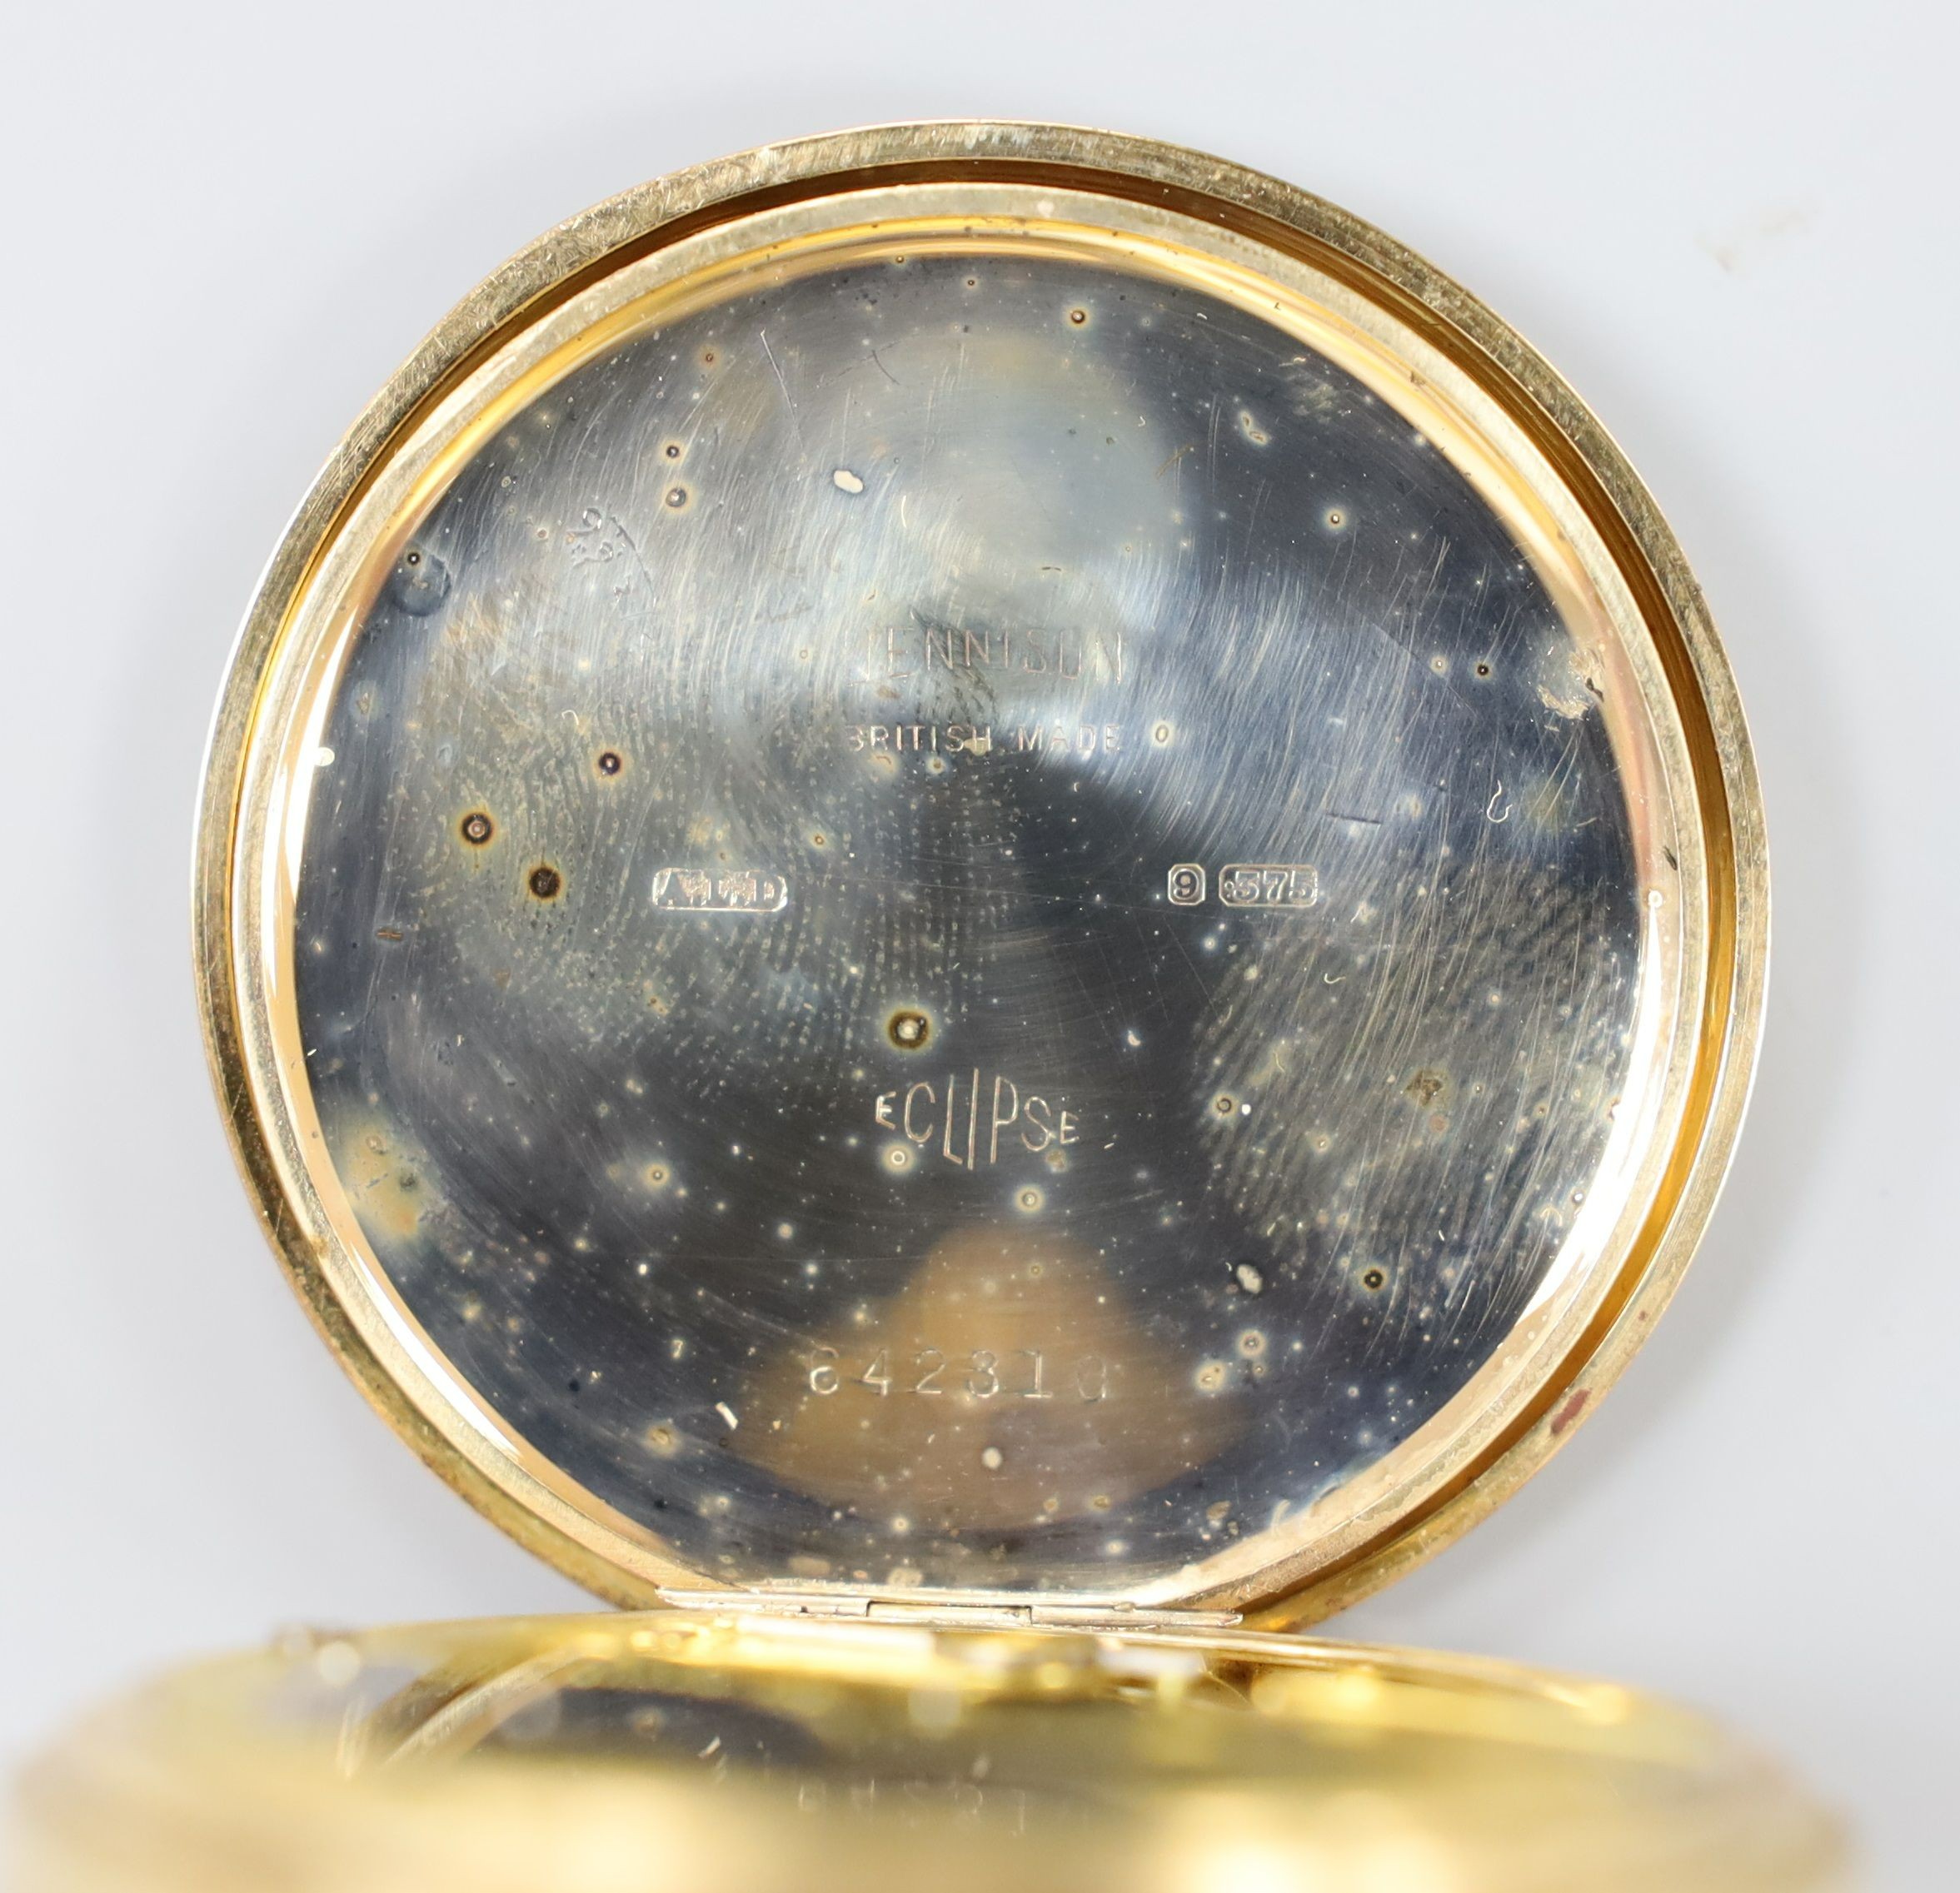 A George V 9ct gold half hunter keyless pocket watch by Samuel of Manchester, case diameter 49mm, gross weight 91.8 grams.